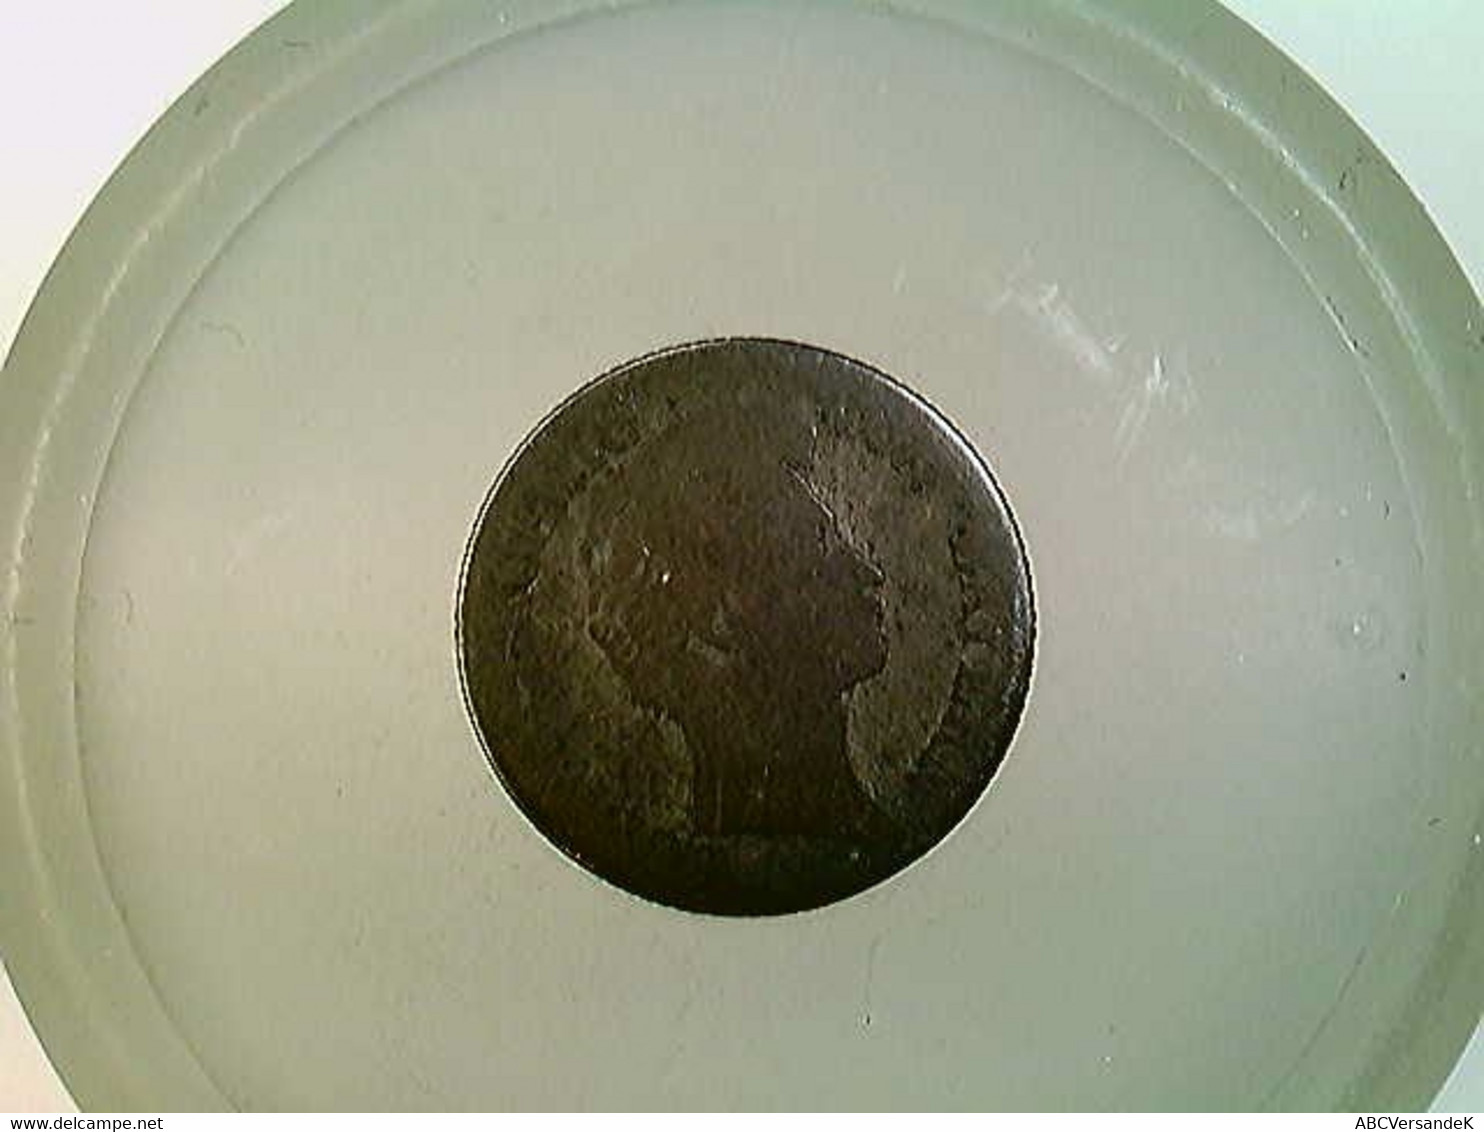 Münze, 6 K (Kreuzer), 1831, Ludwig König Von Bayern, Silber - Numismatiek